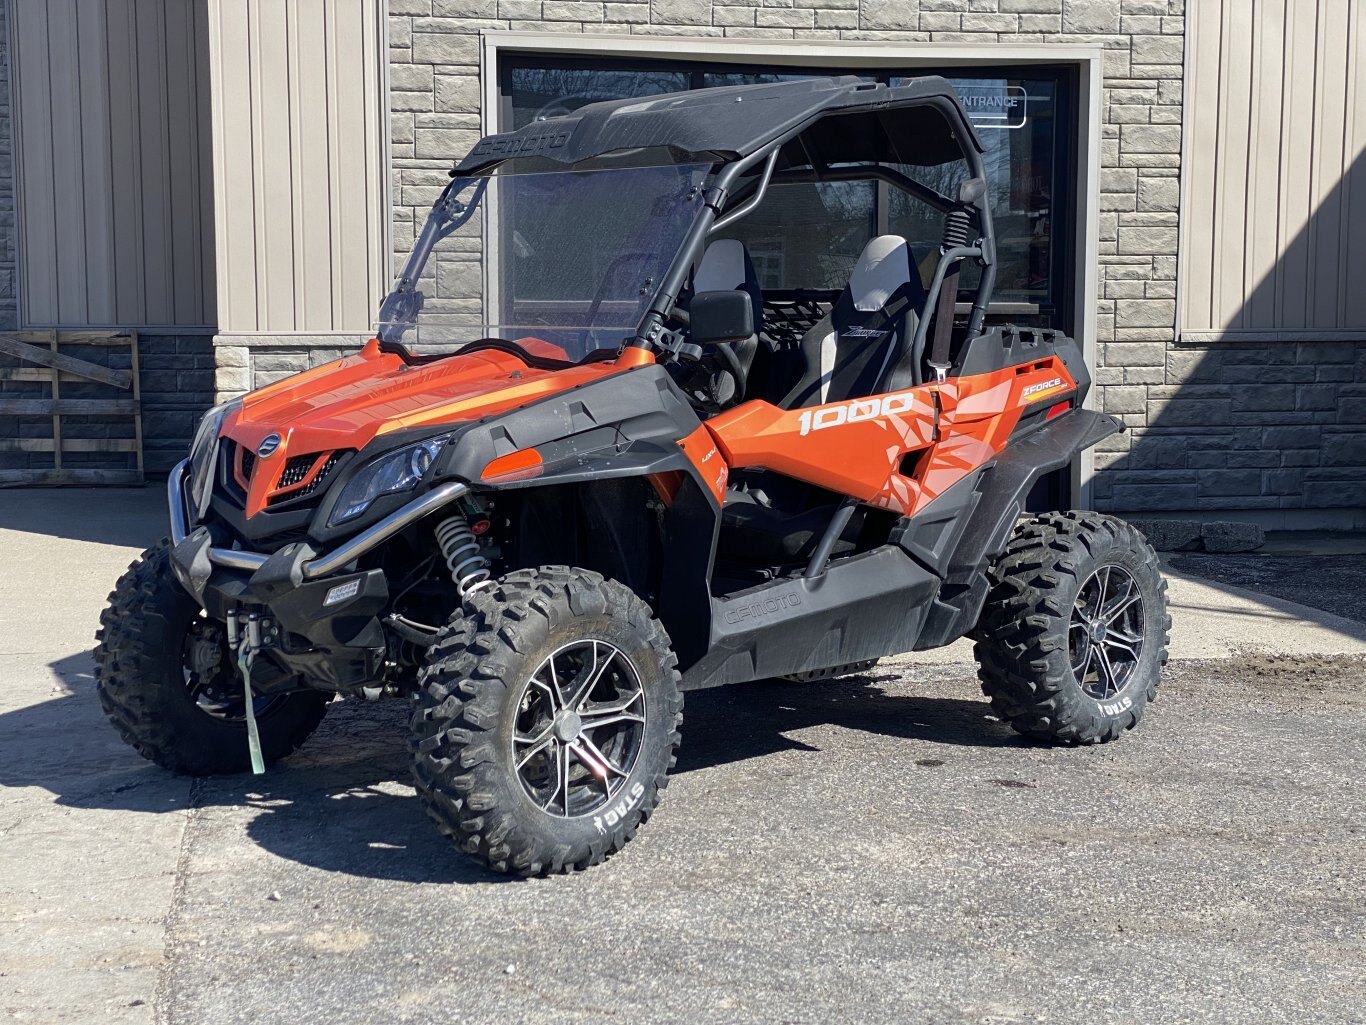 2019 Polaris® Sportsman XP® 1000 2UP ATV With Plow Kit